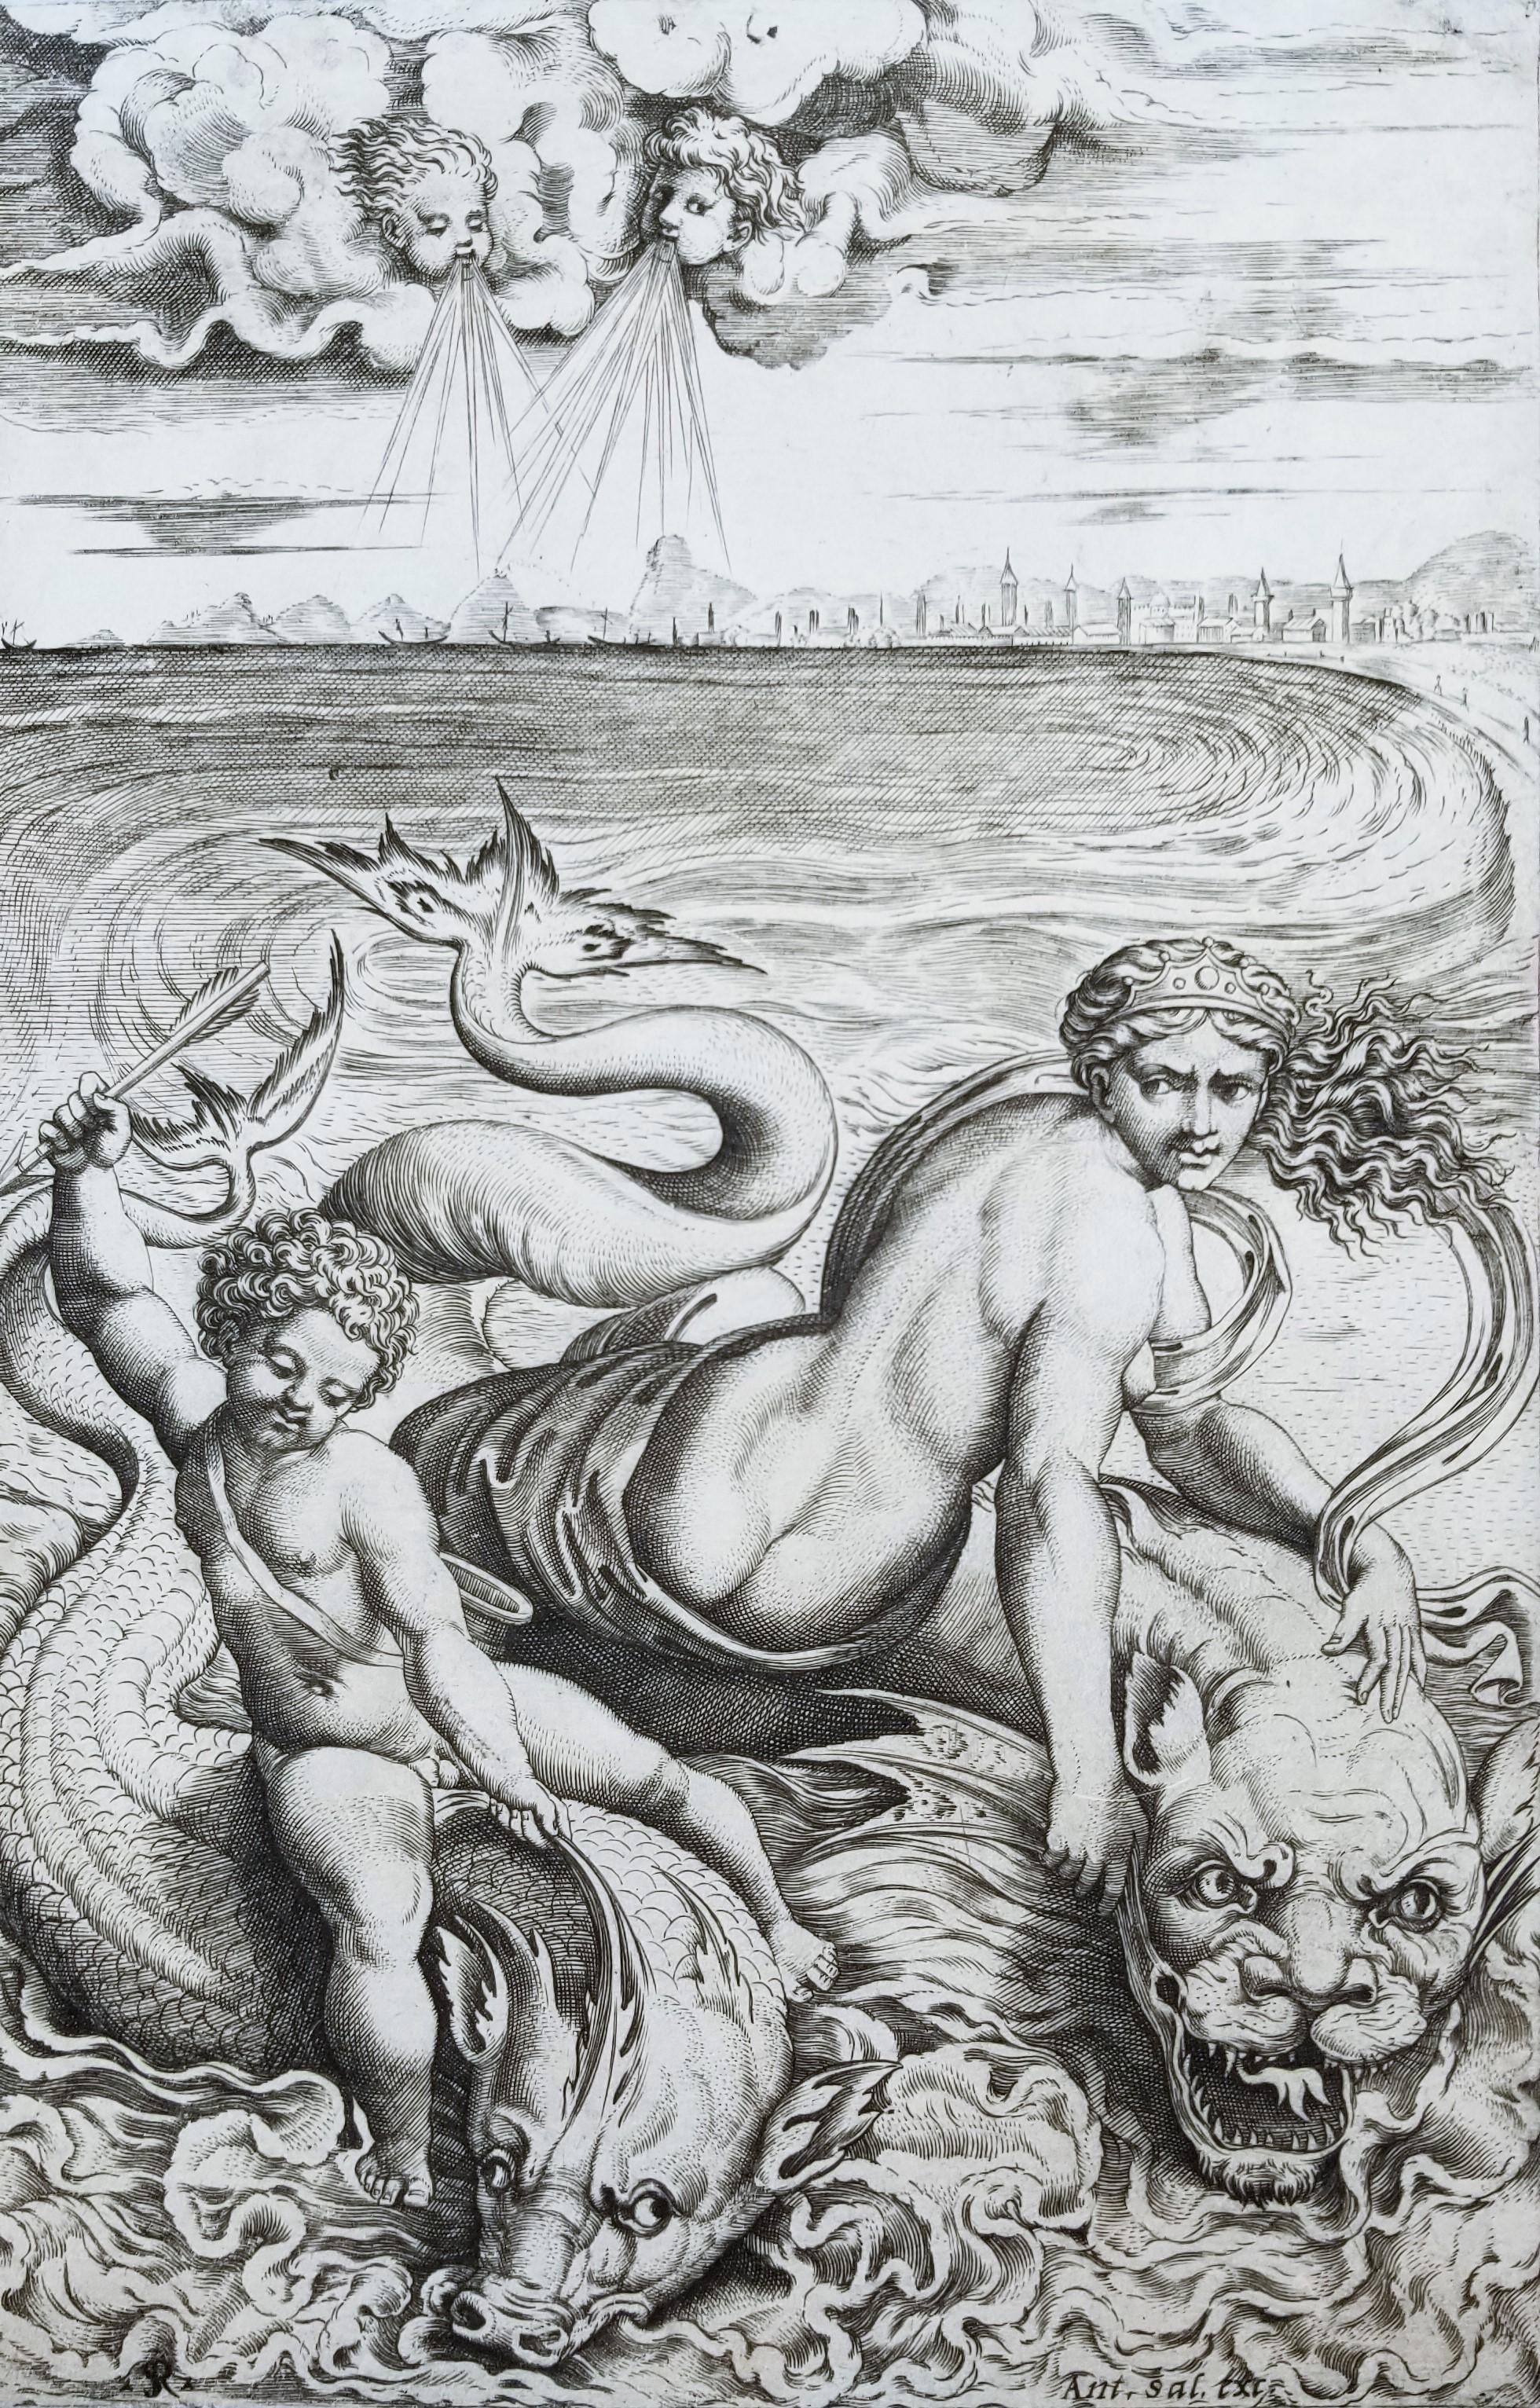 Marco Dente Nude Print – Venere e Amore sui Delfini (Venus und Amor auf Delphinen) /// Altmeister Raphael